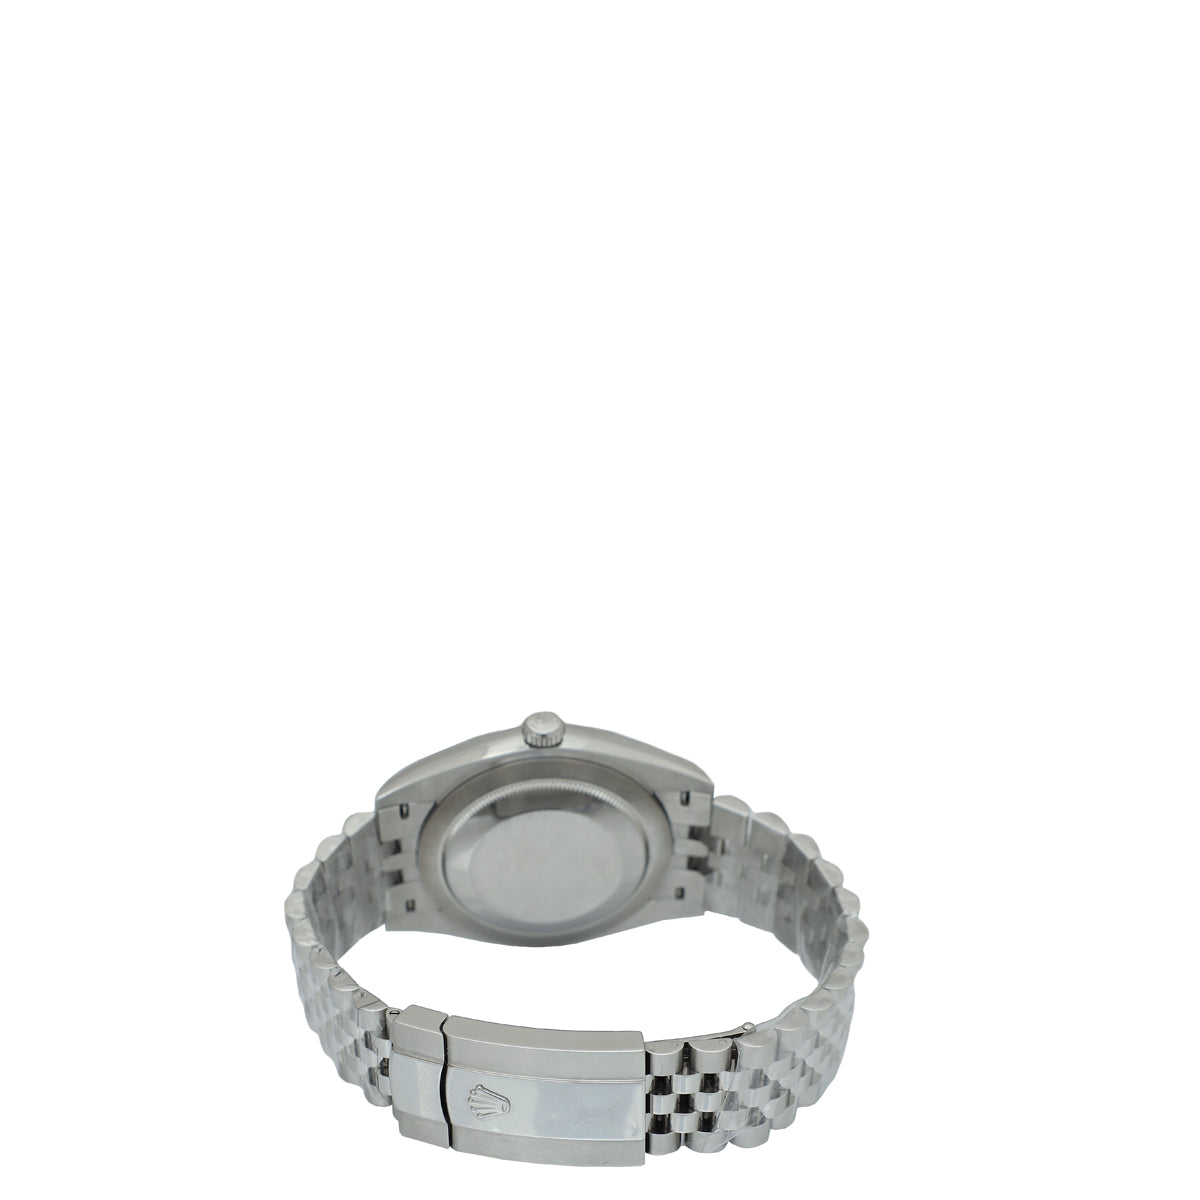 Rolex ST.ST Datejust Grey Dial 40mm Watch